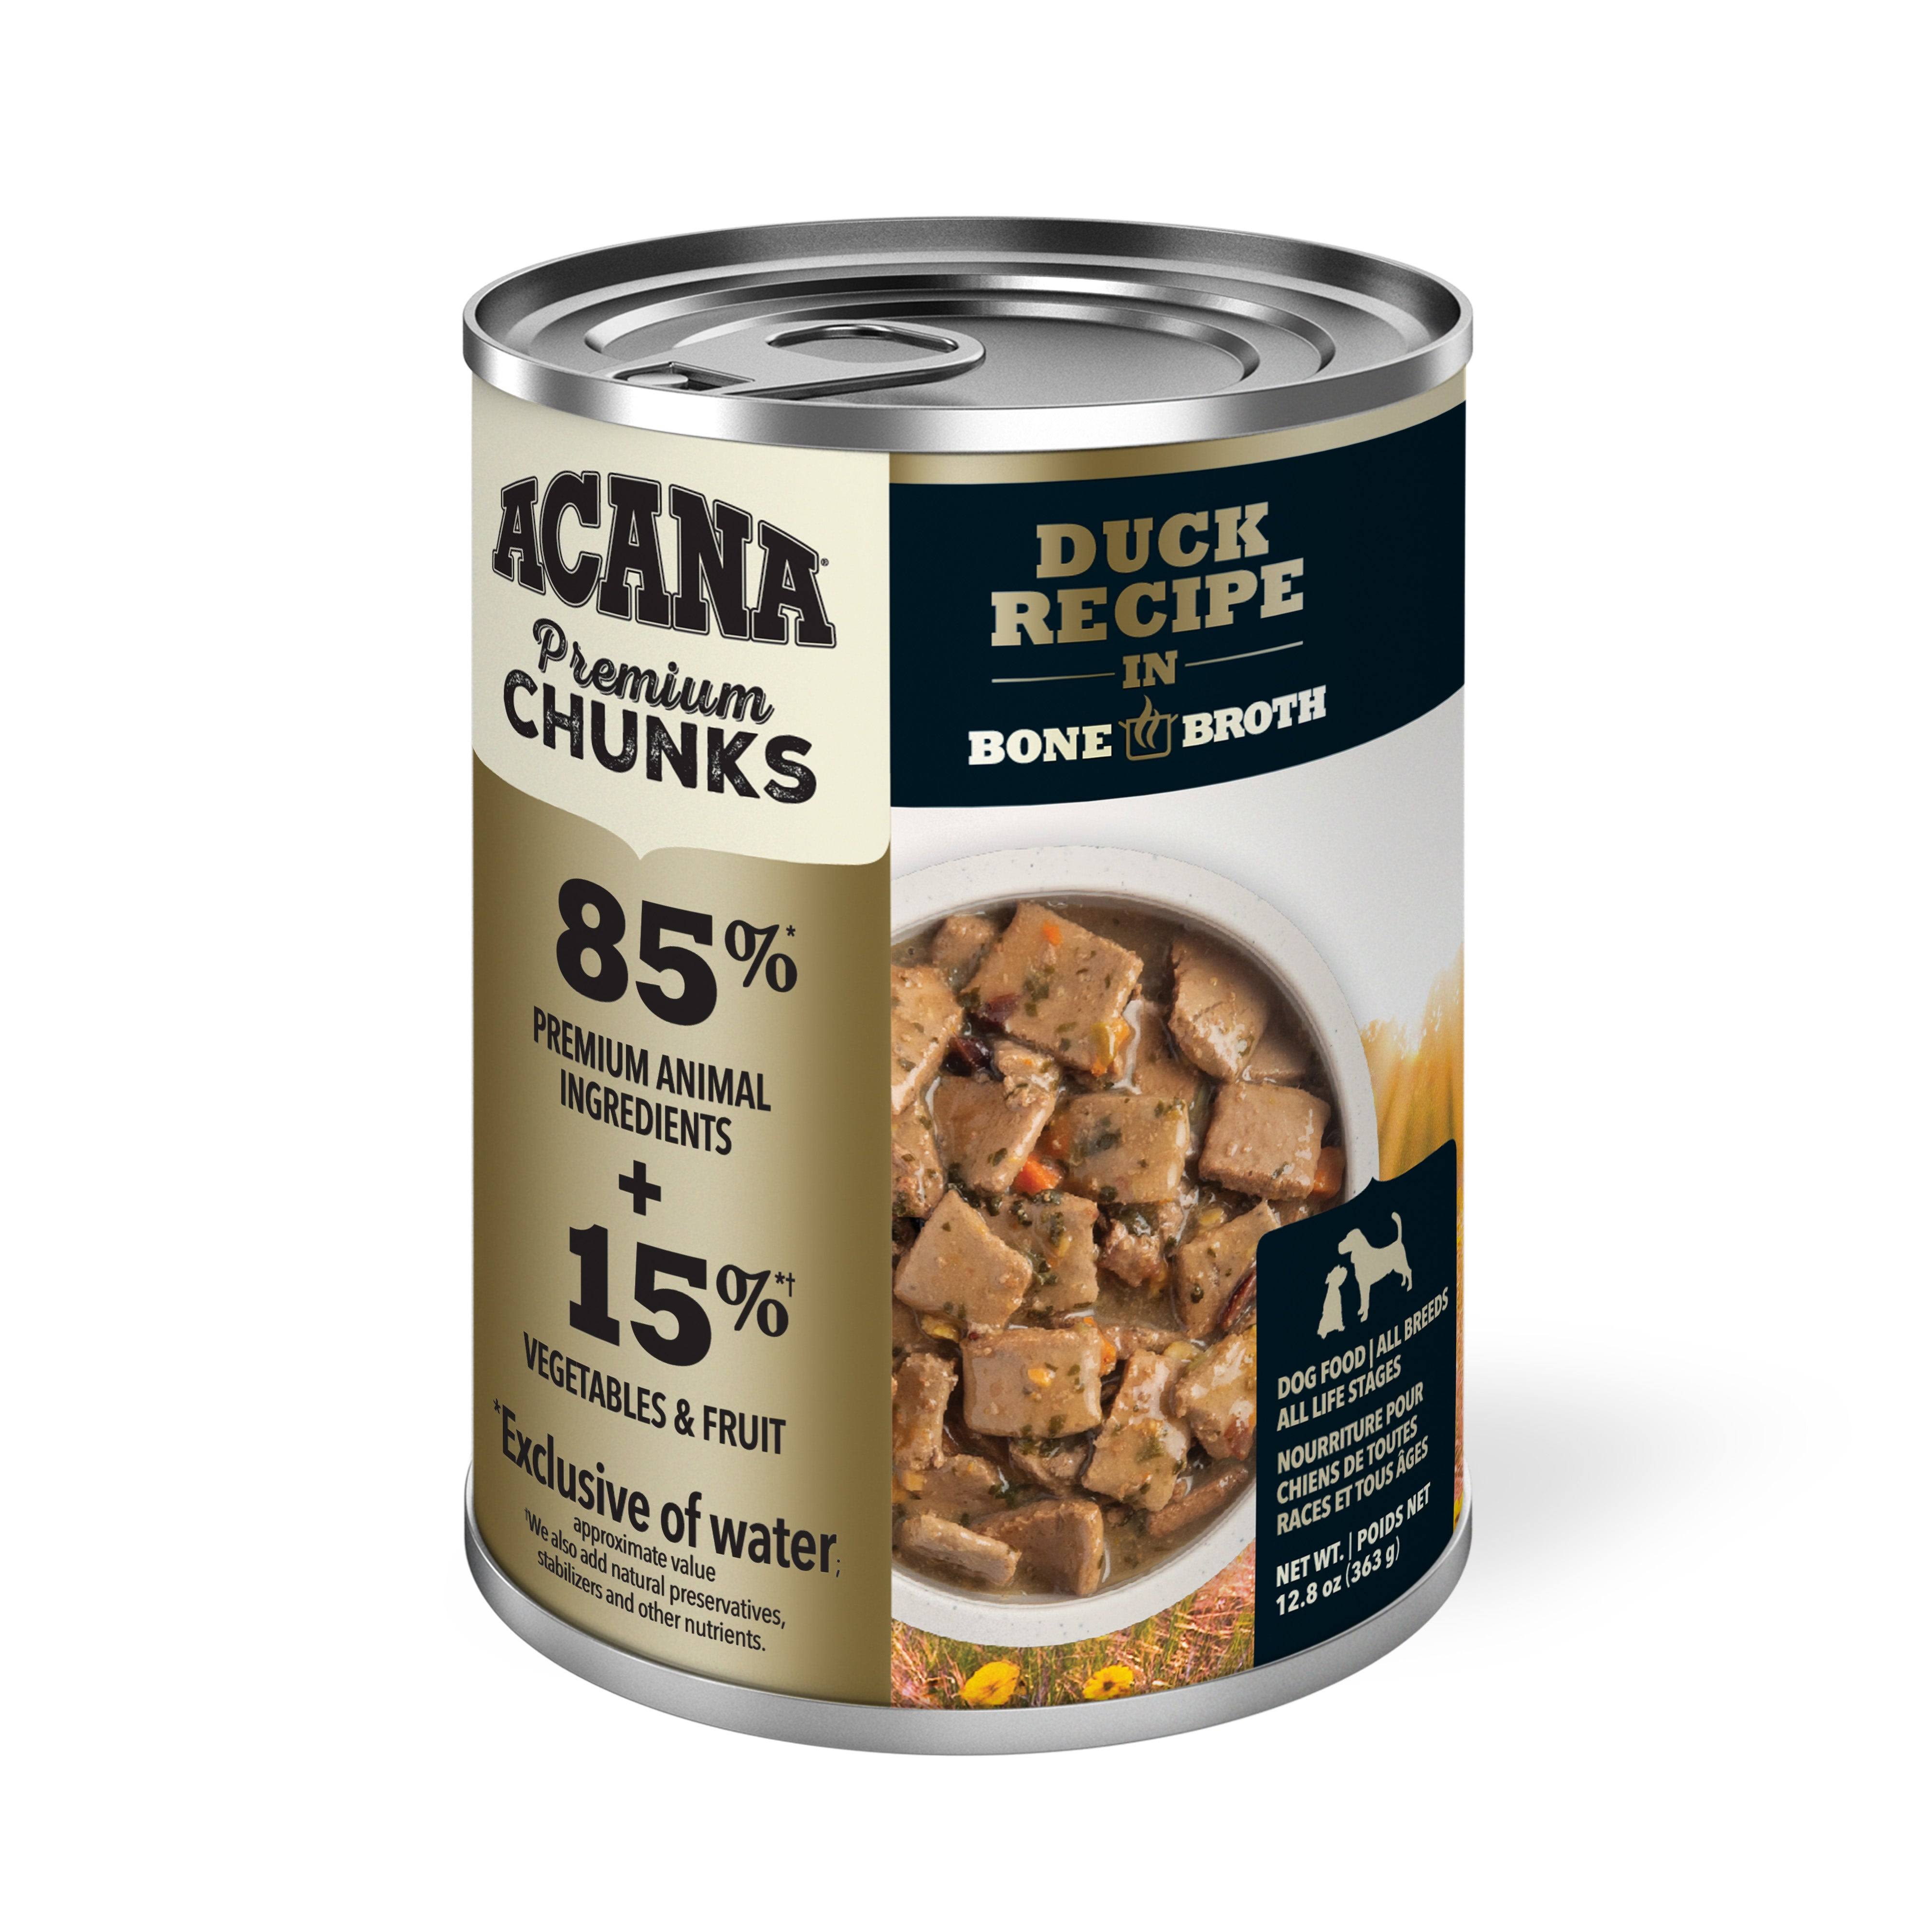 Acana Premium Chunks Dog Food - Duck Recipe in Bone Broth - 12.8 oz